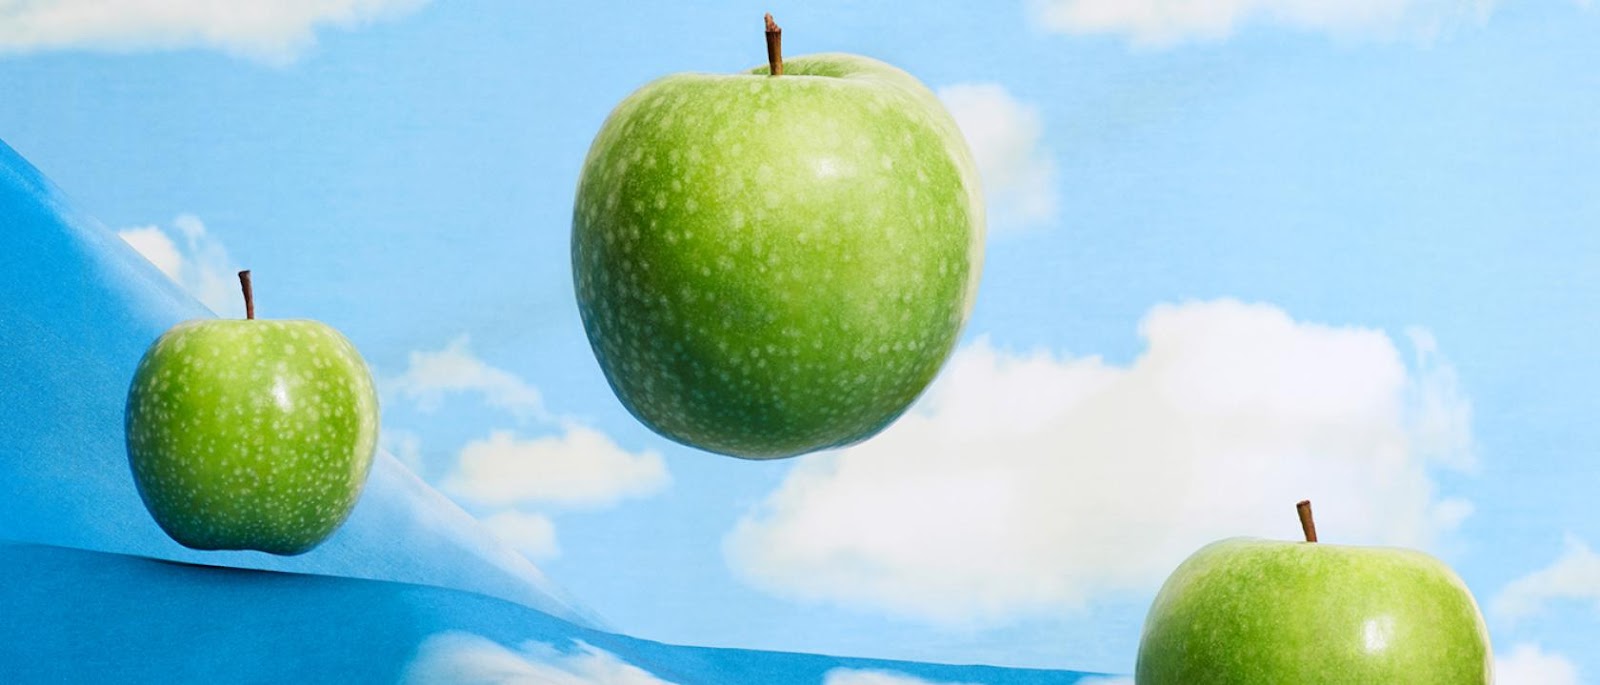 manzana magritte.jpg